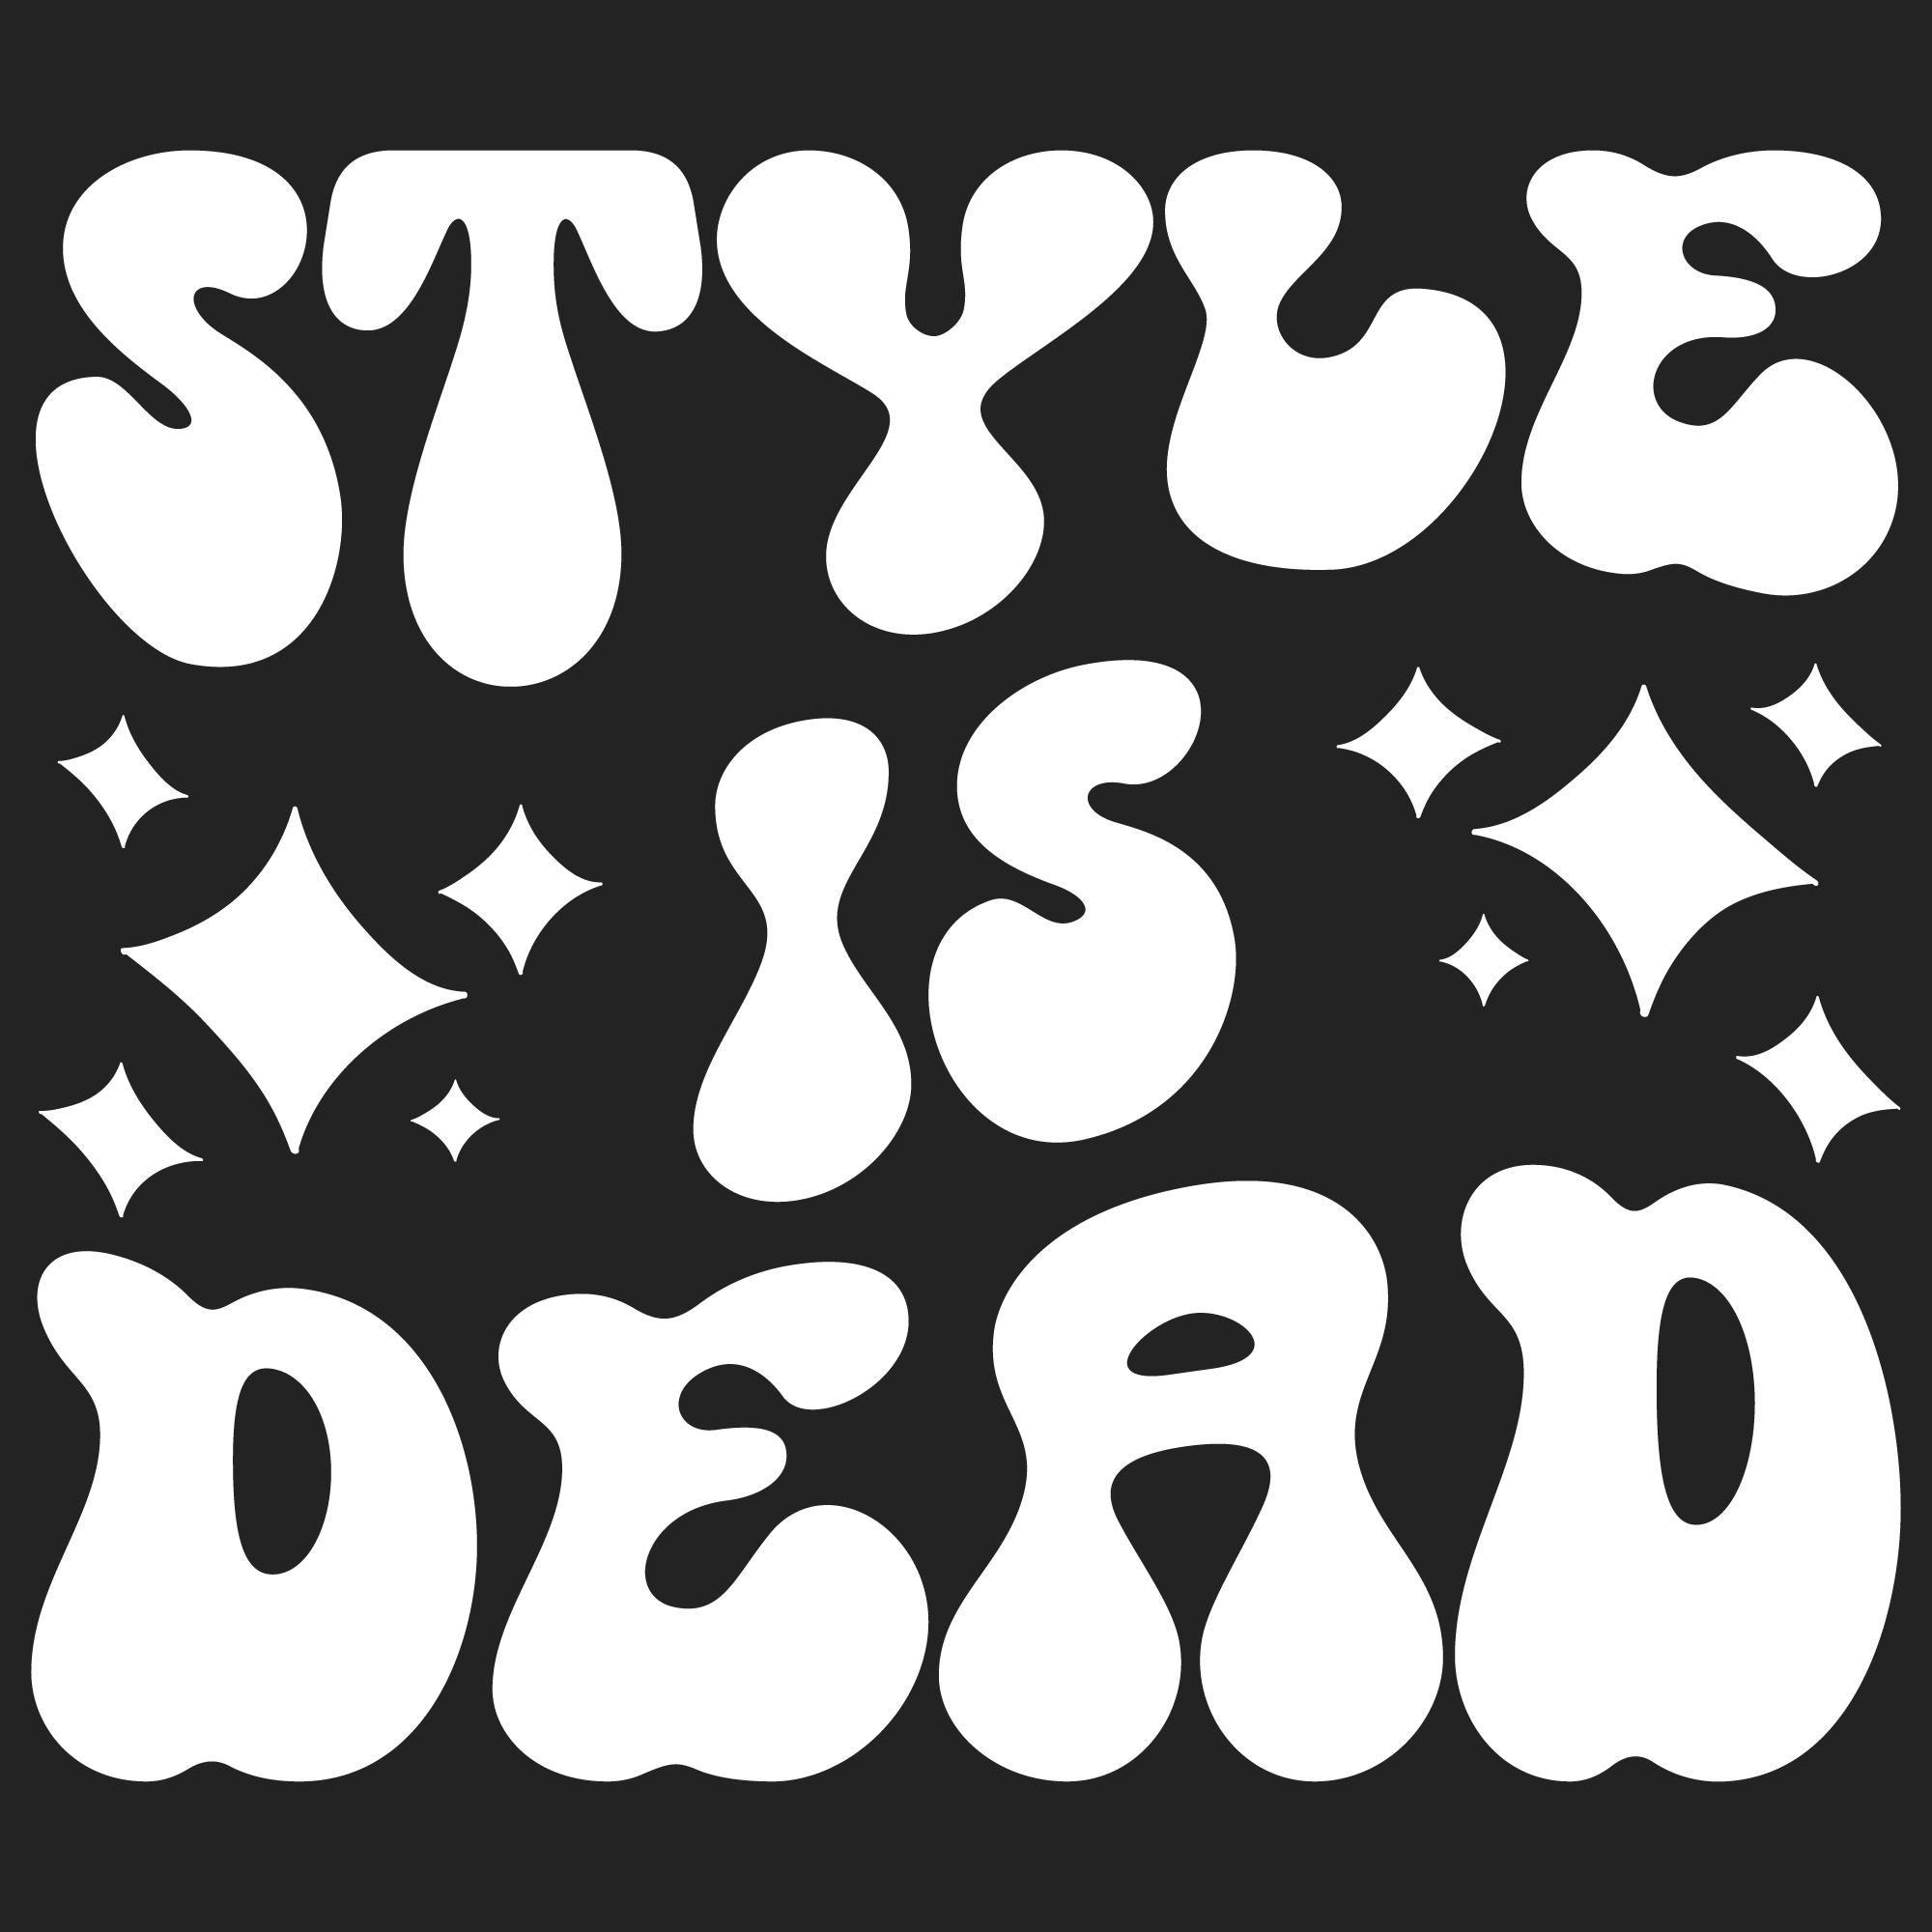 Style is Dead